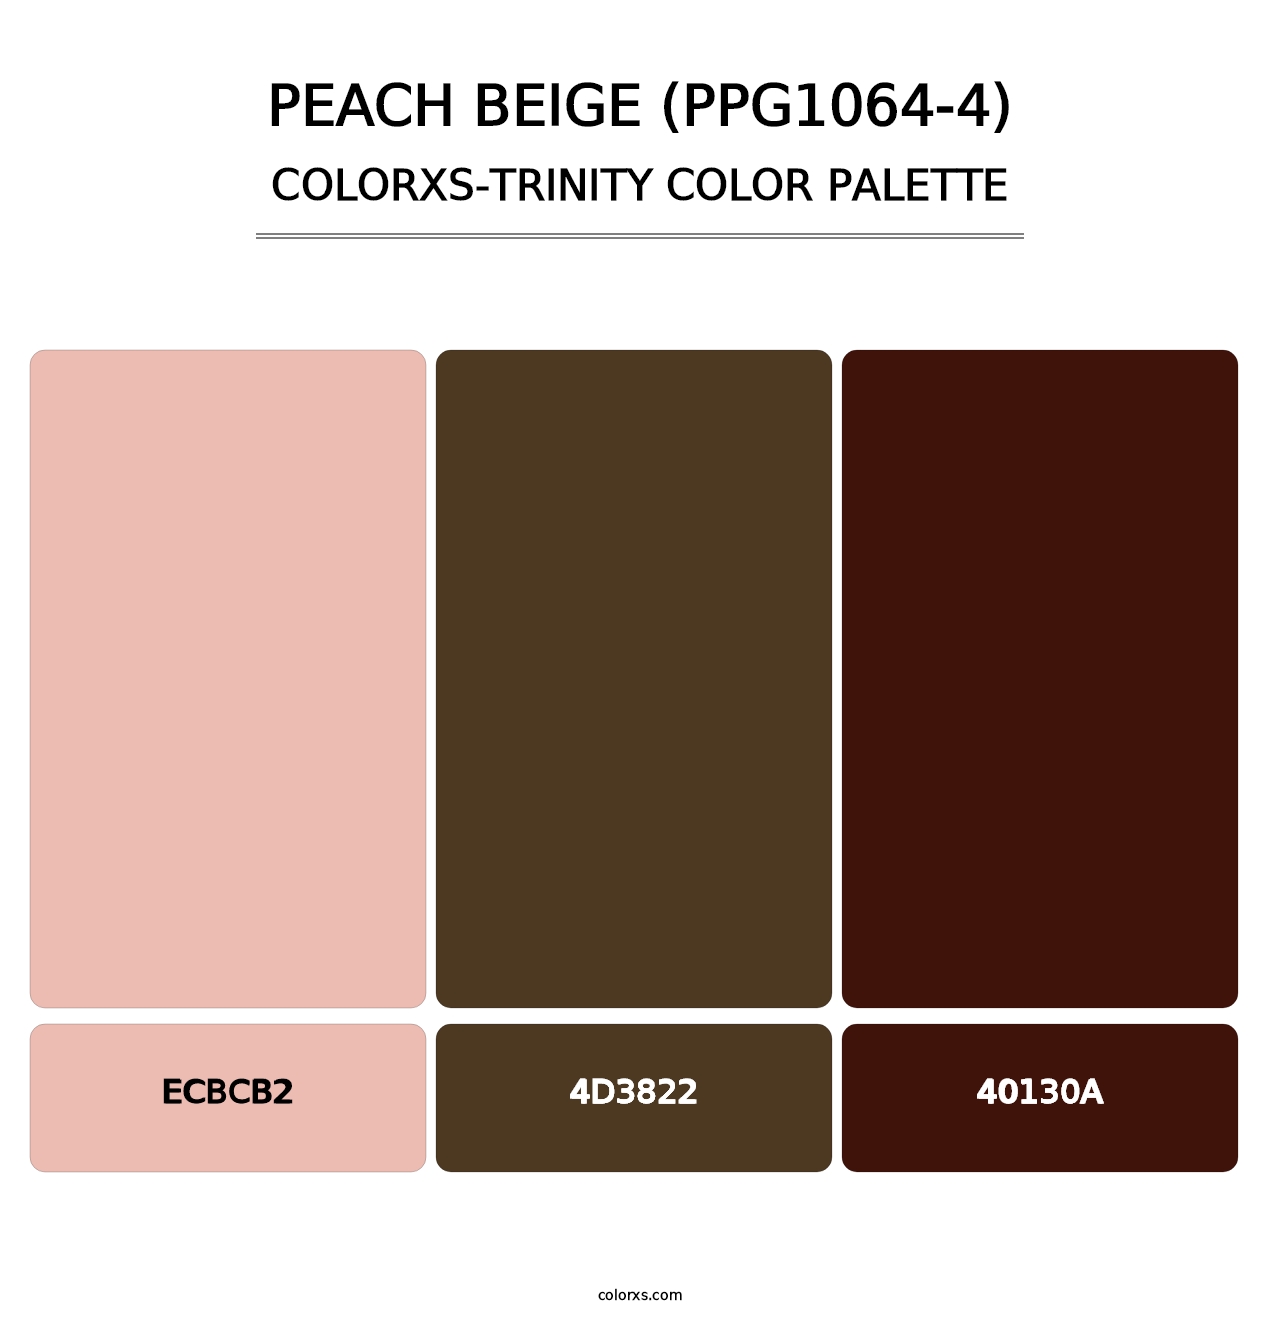 Peach Beige (PPG1064-4) - Colorxs Trinity Palette